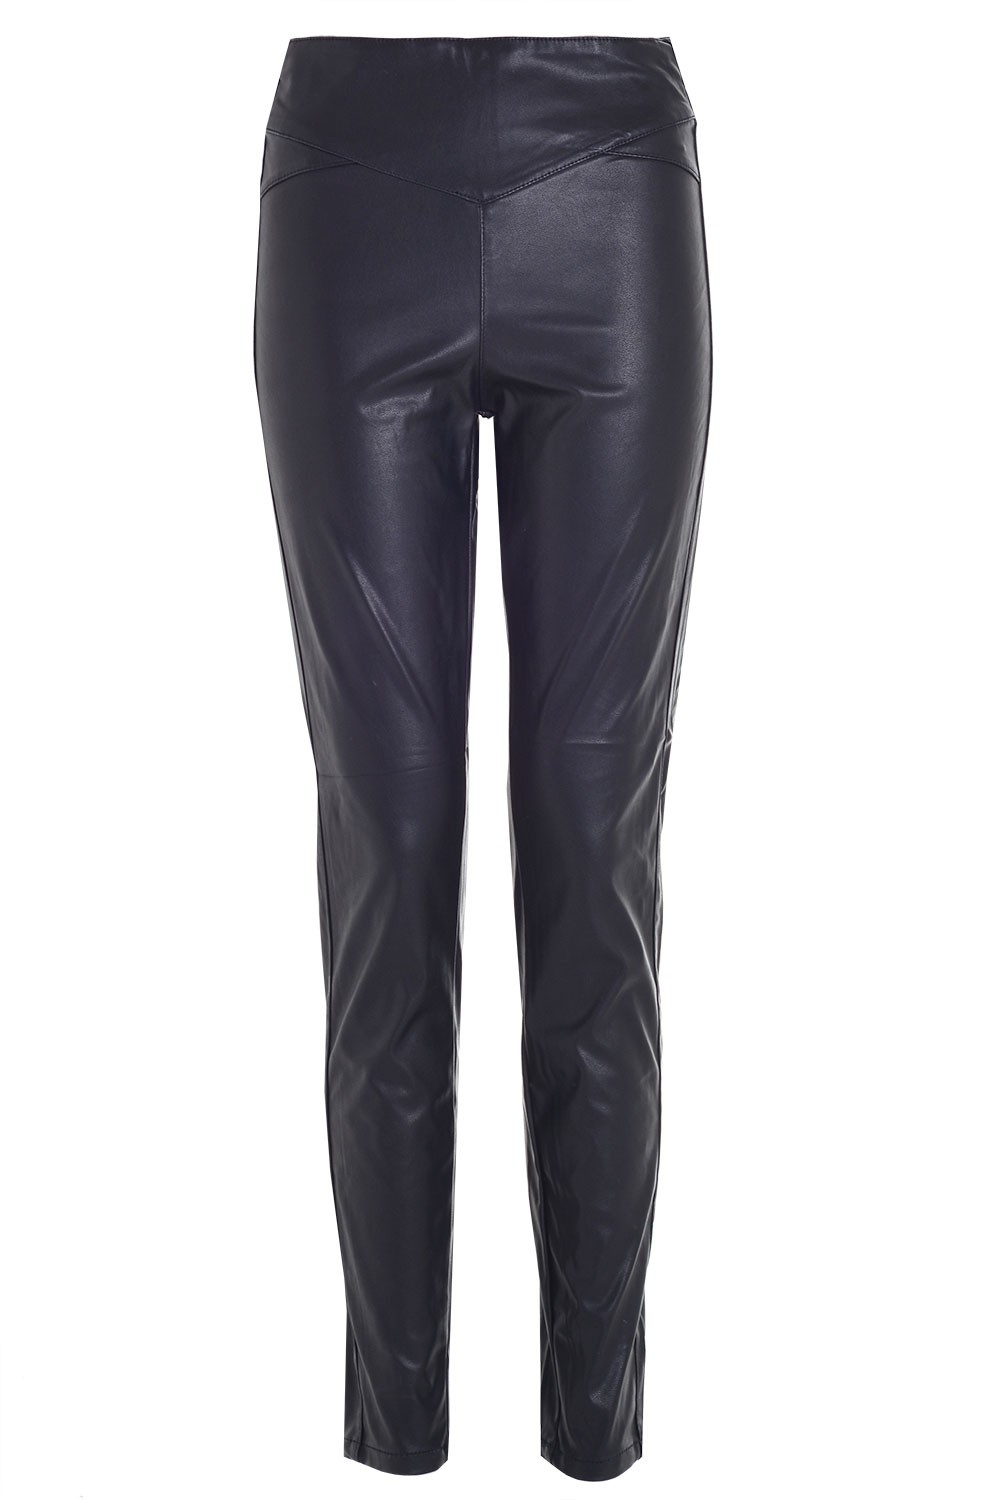 Vero Moda Supreme Short Length PU Pants in Black | iCLOTHING